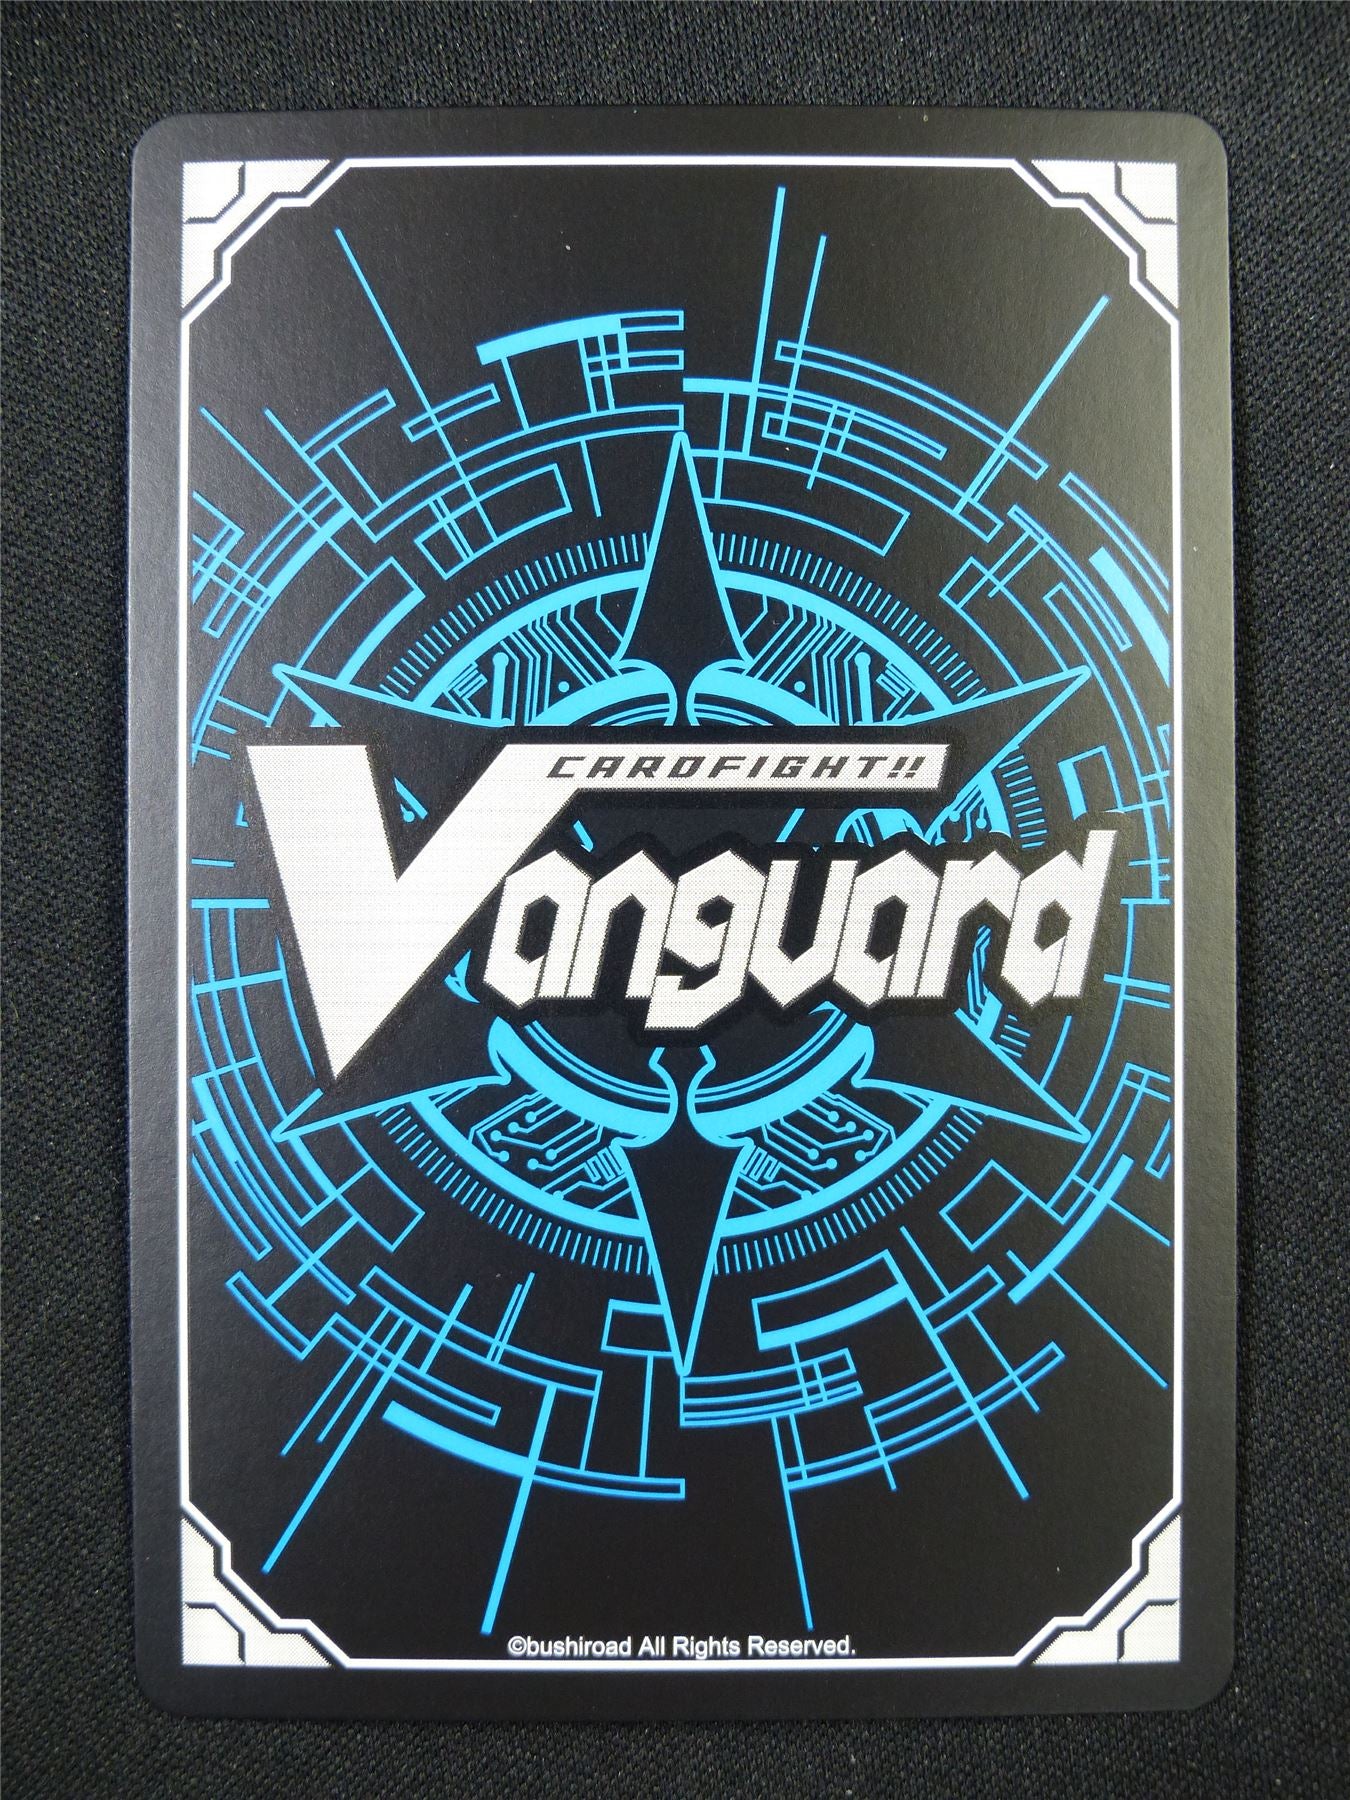 Smokegear Dragon V-EB14 SP - Vanguard Card #32W